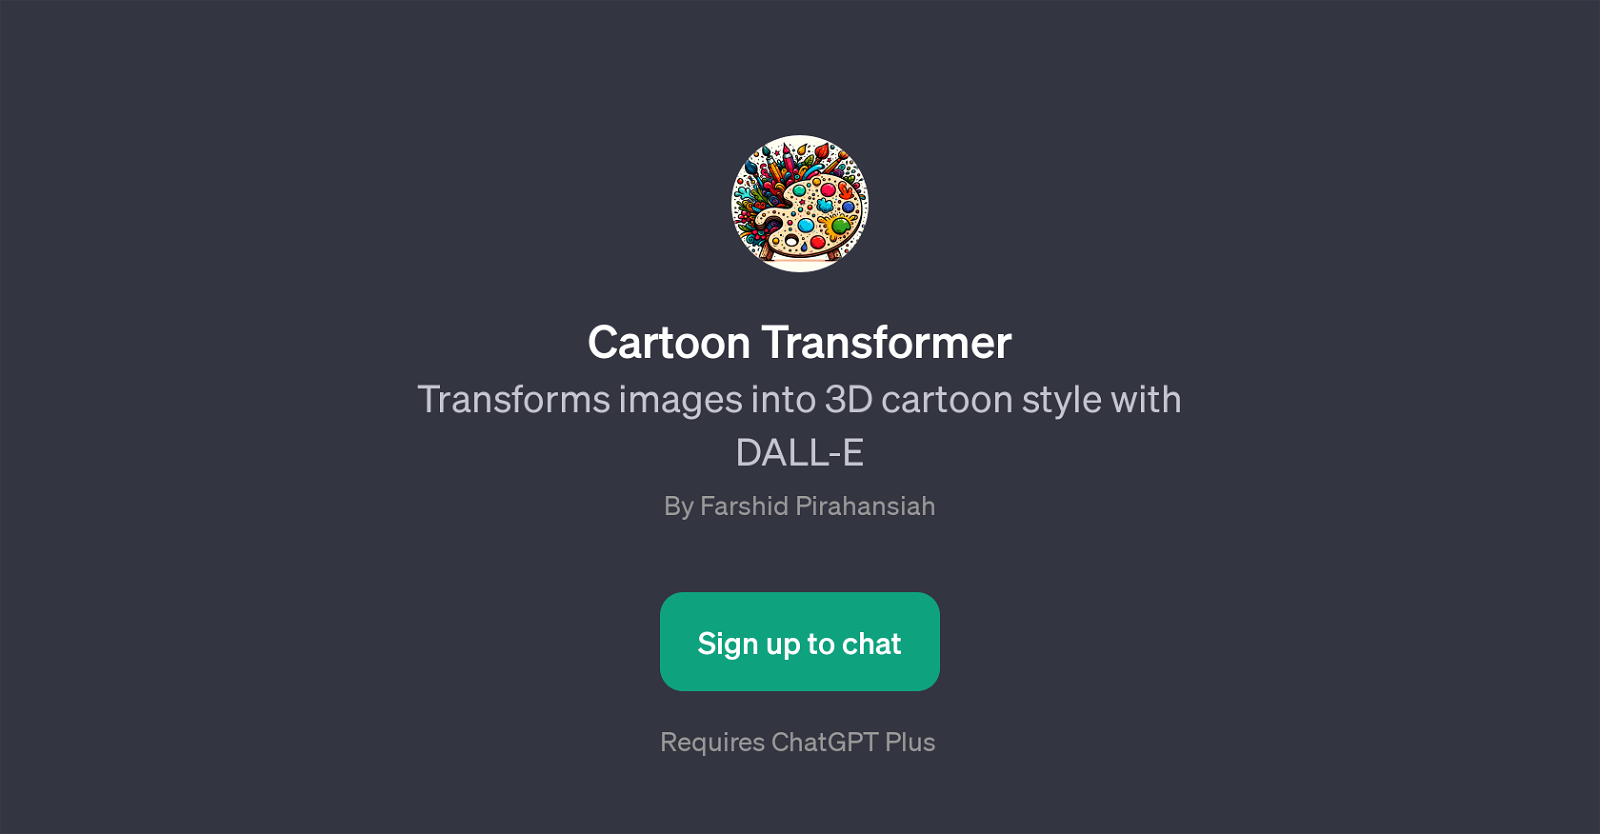 Cartoon Transformer website